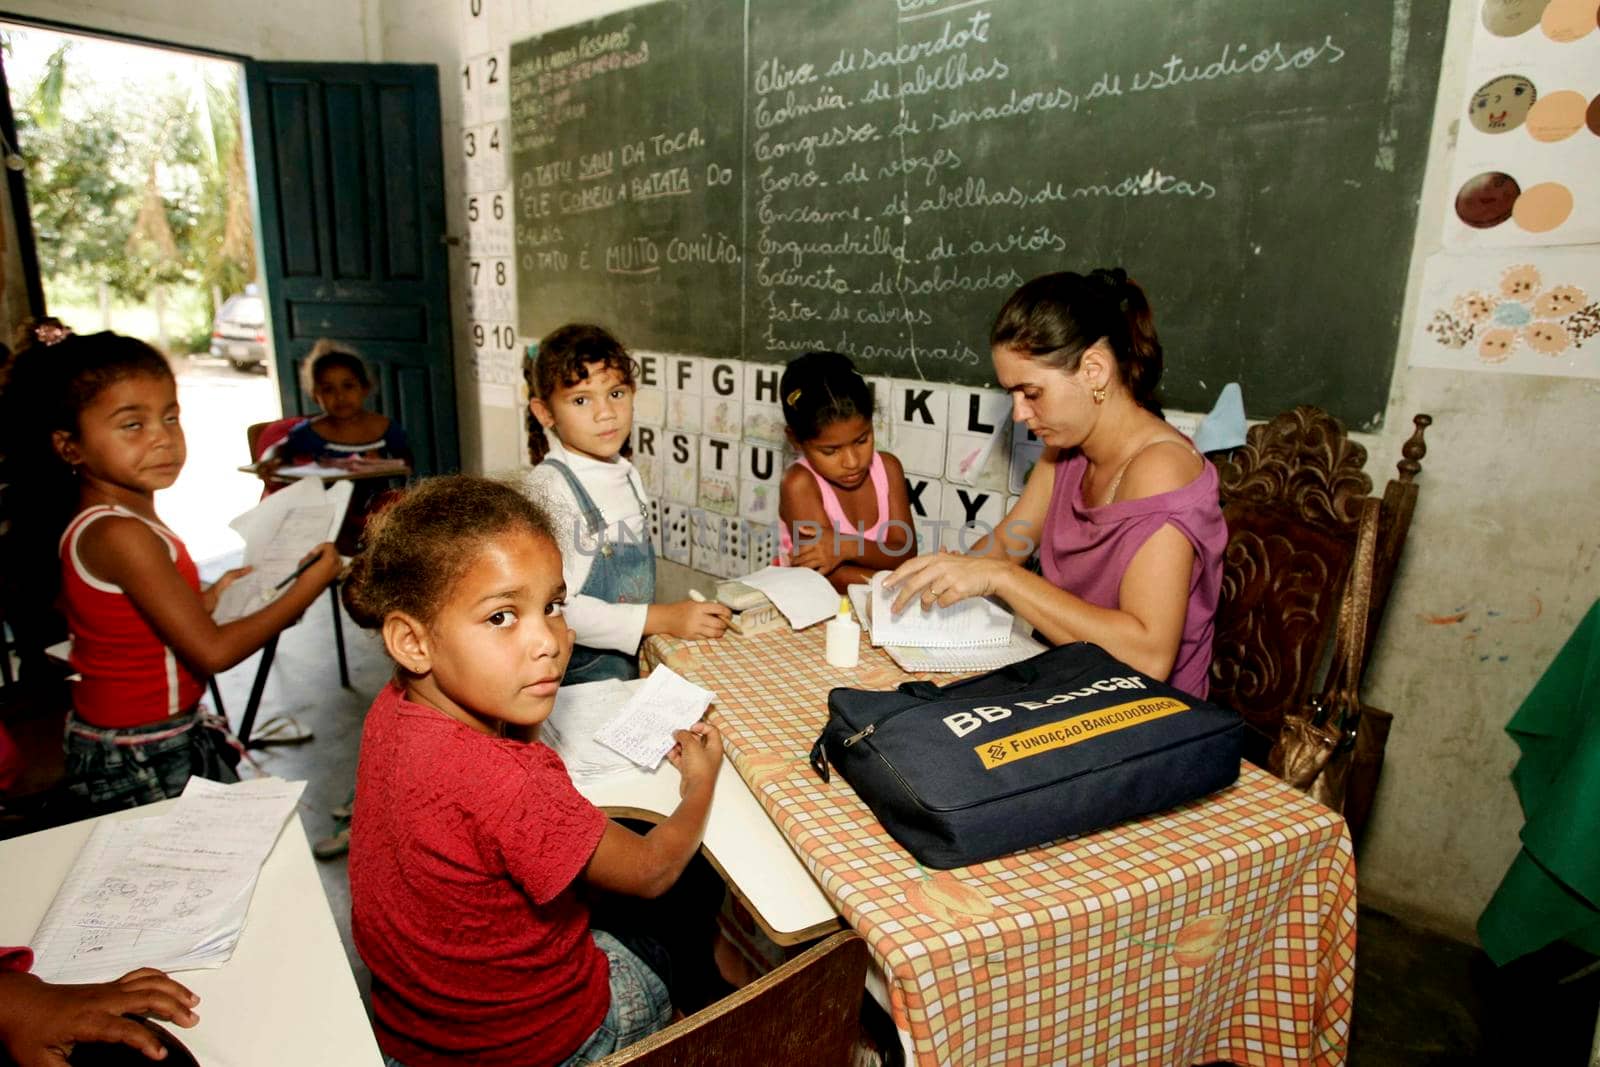 itabela, bahia / brazil - september 15, 2009: students and teacher in the rural area of the city of Itabela.